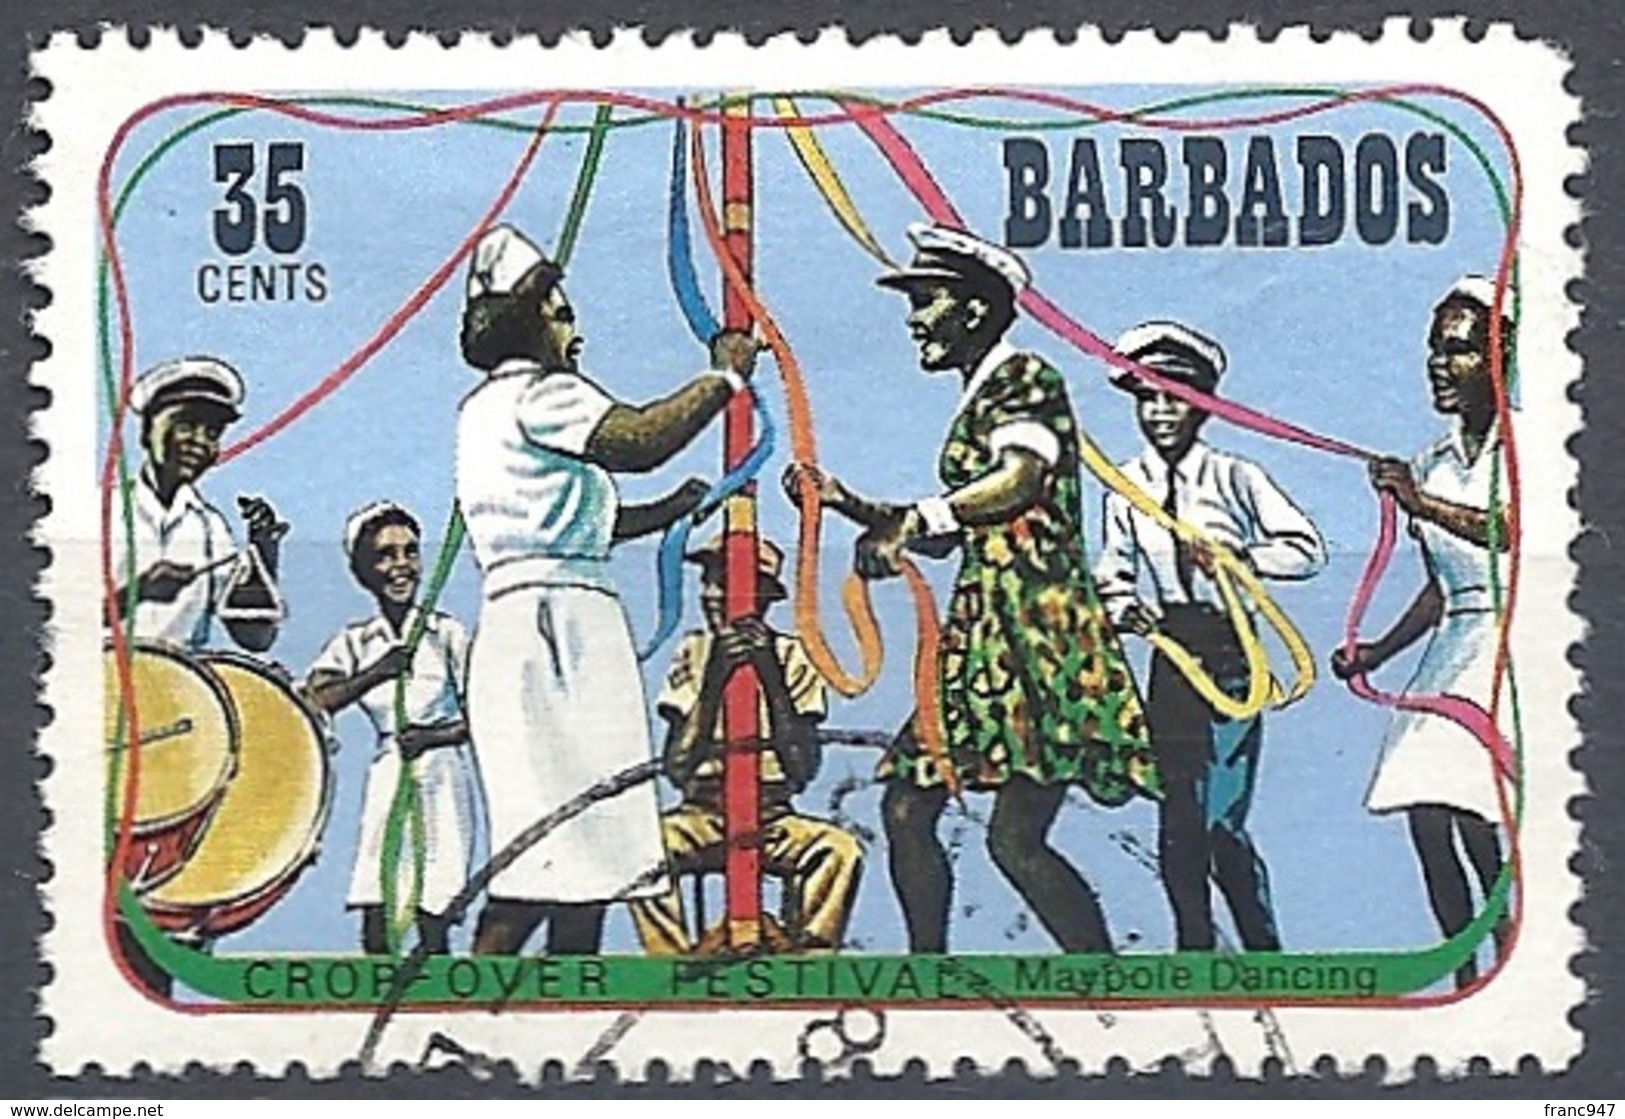 Barbados, 1975 Crop-over Festival, 35c Multi # SG. 533 - Michel 395 - Scott 426  USED - Barbades (1966-...)